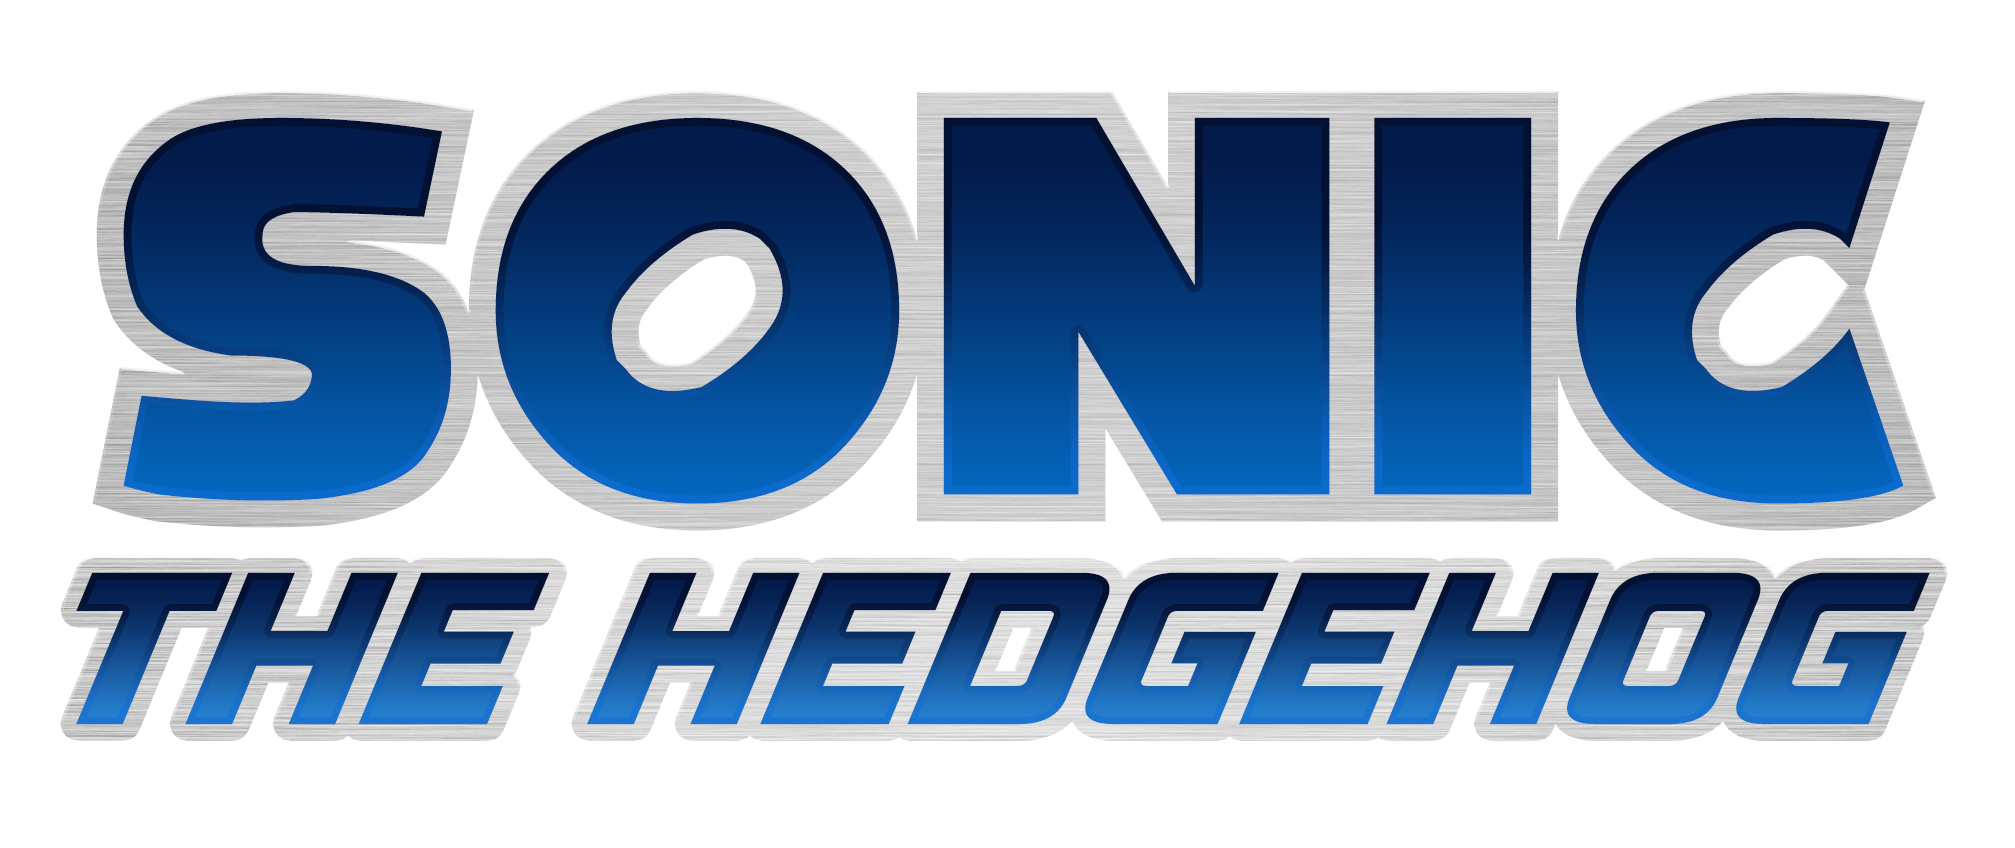 Sonic The Hedgehog Logo PNG Photos